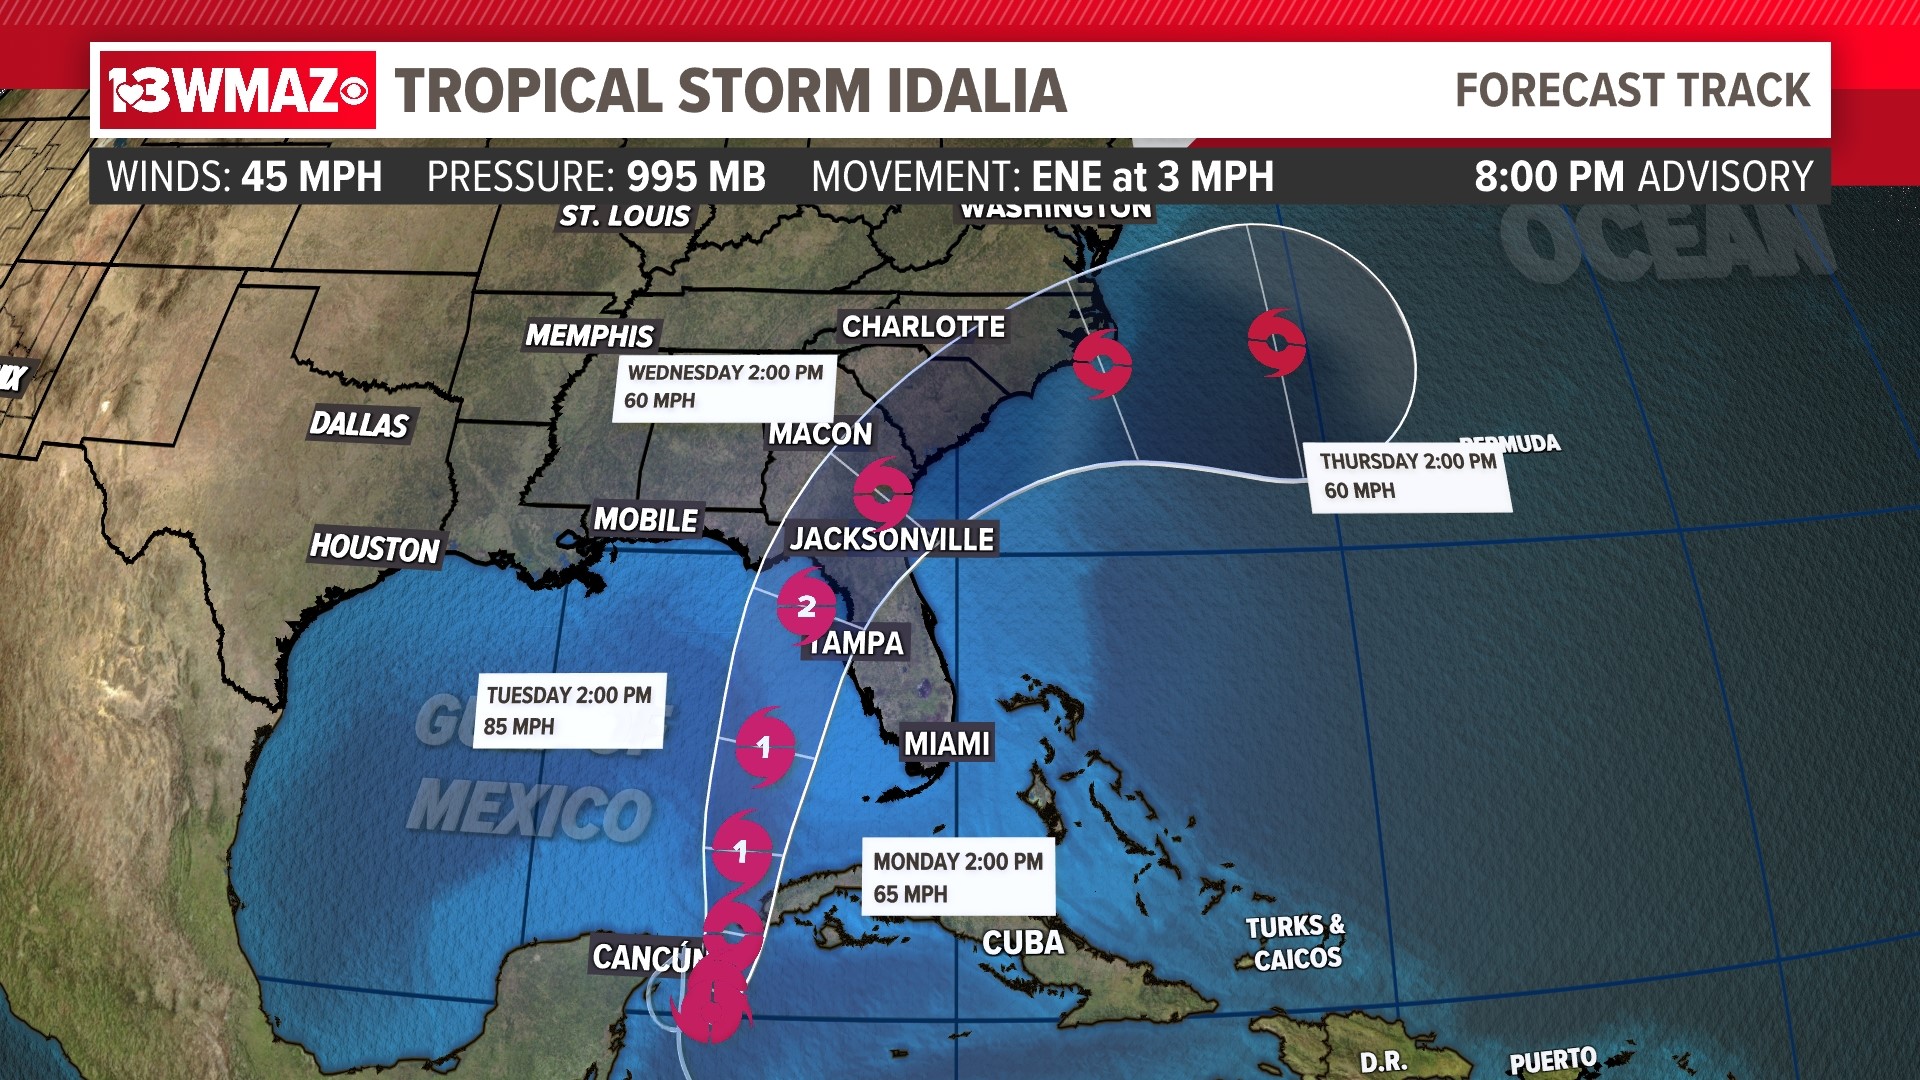 8 PM Advisory from the National Hurricane Center on Tropical Storm Idalia